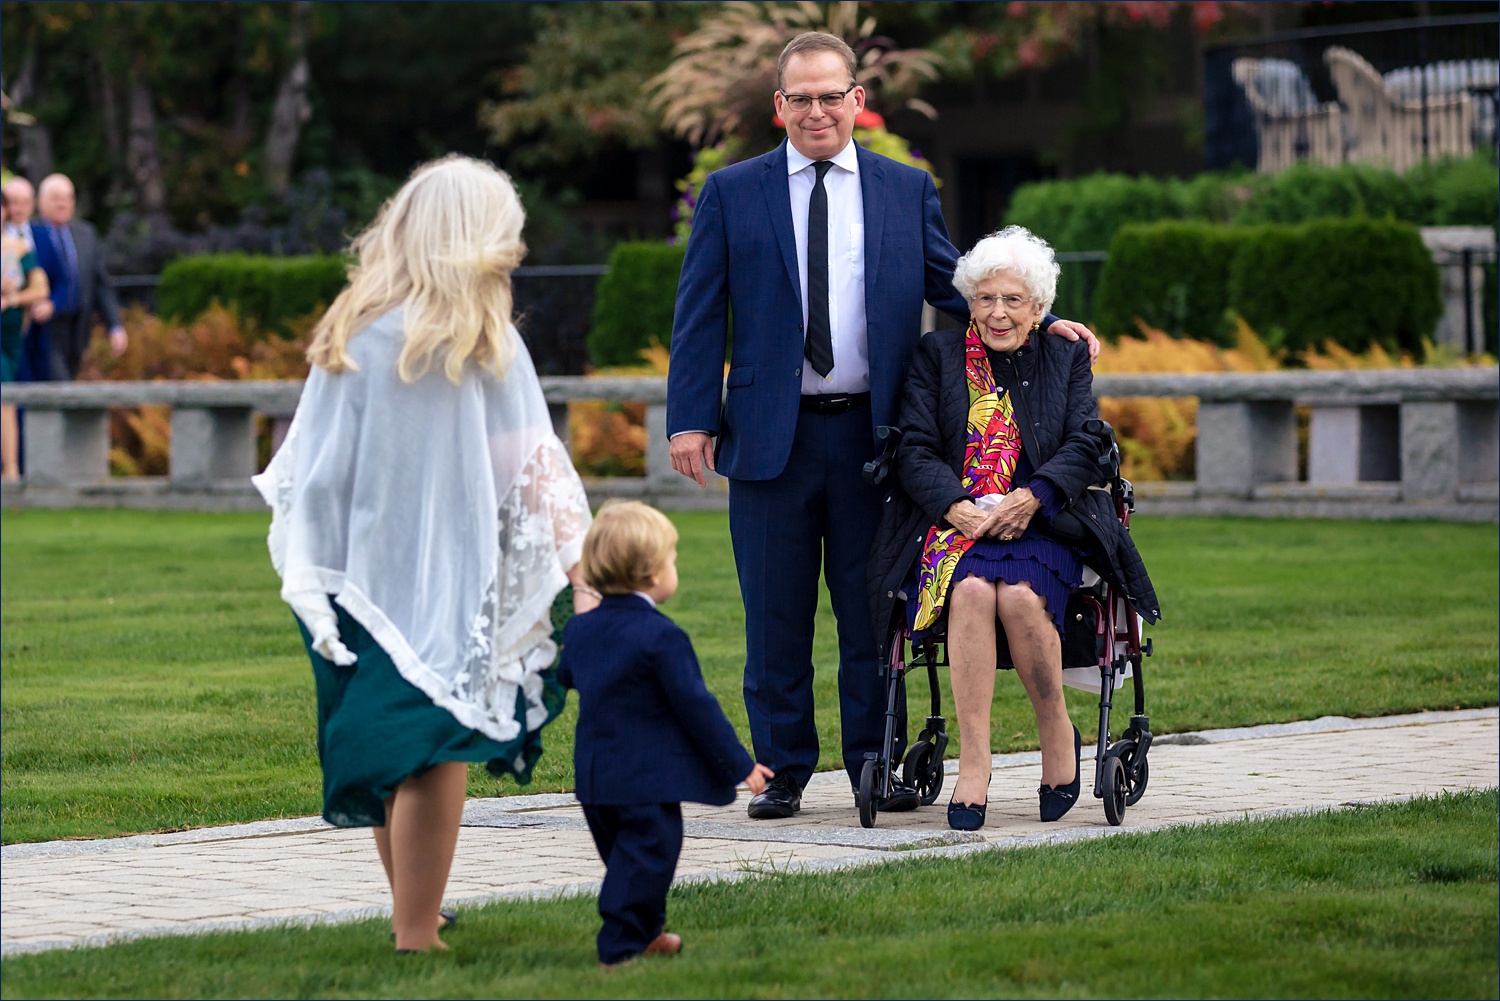 Grandma greets the littlest wedding guest